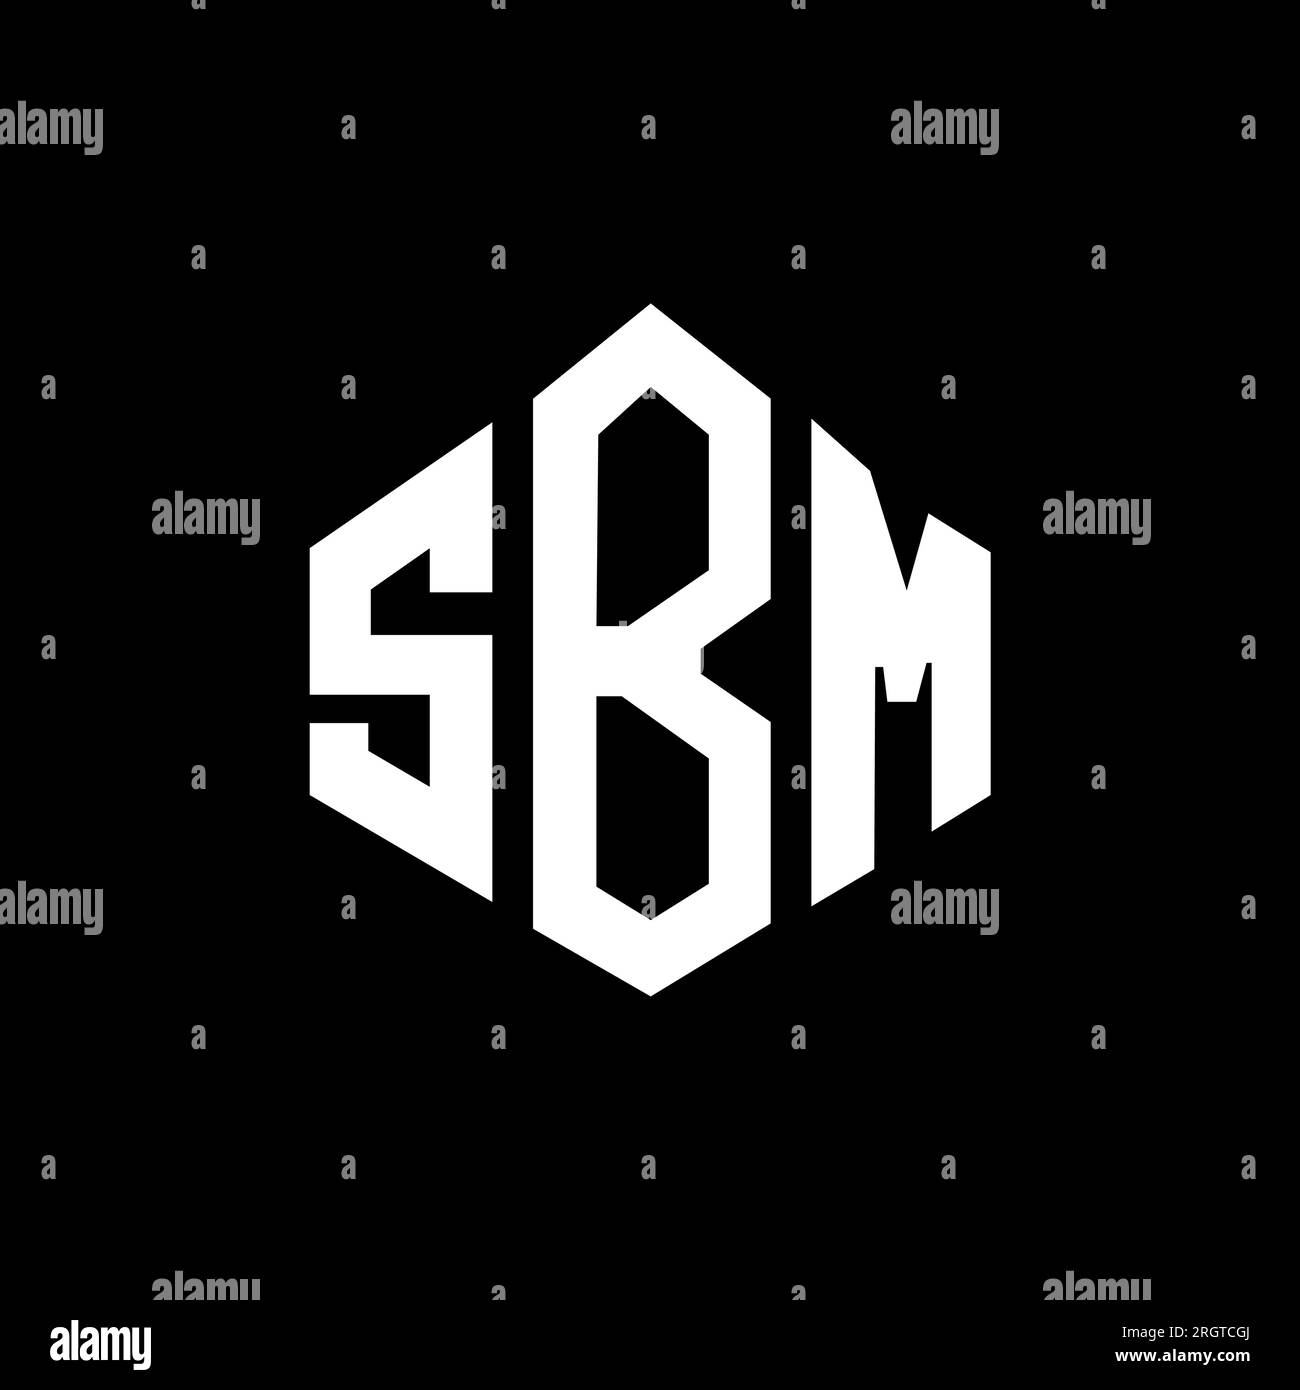 Share 118+ sbm logo super hot